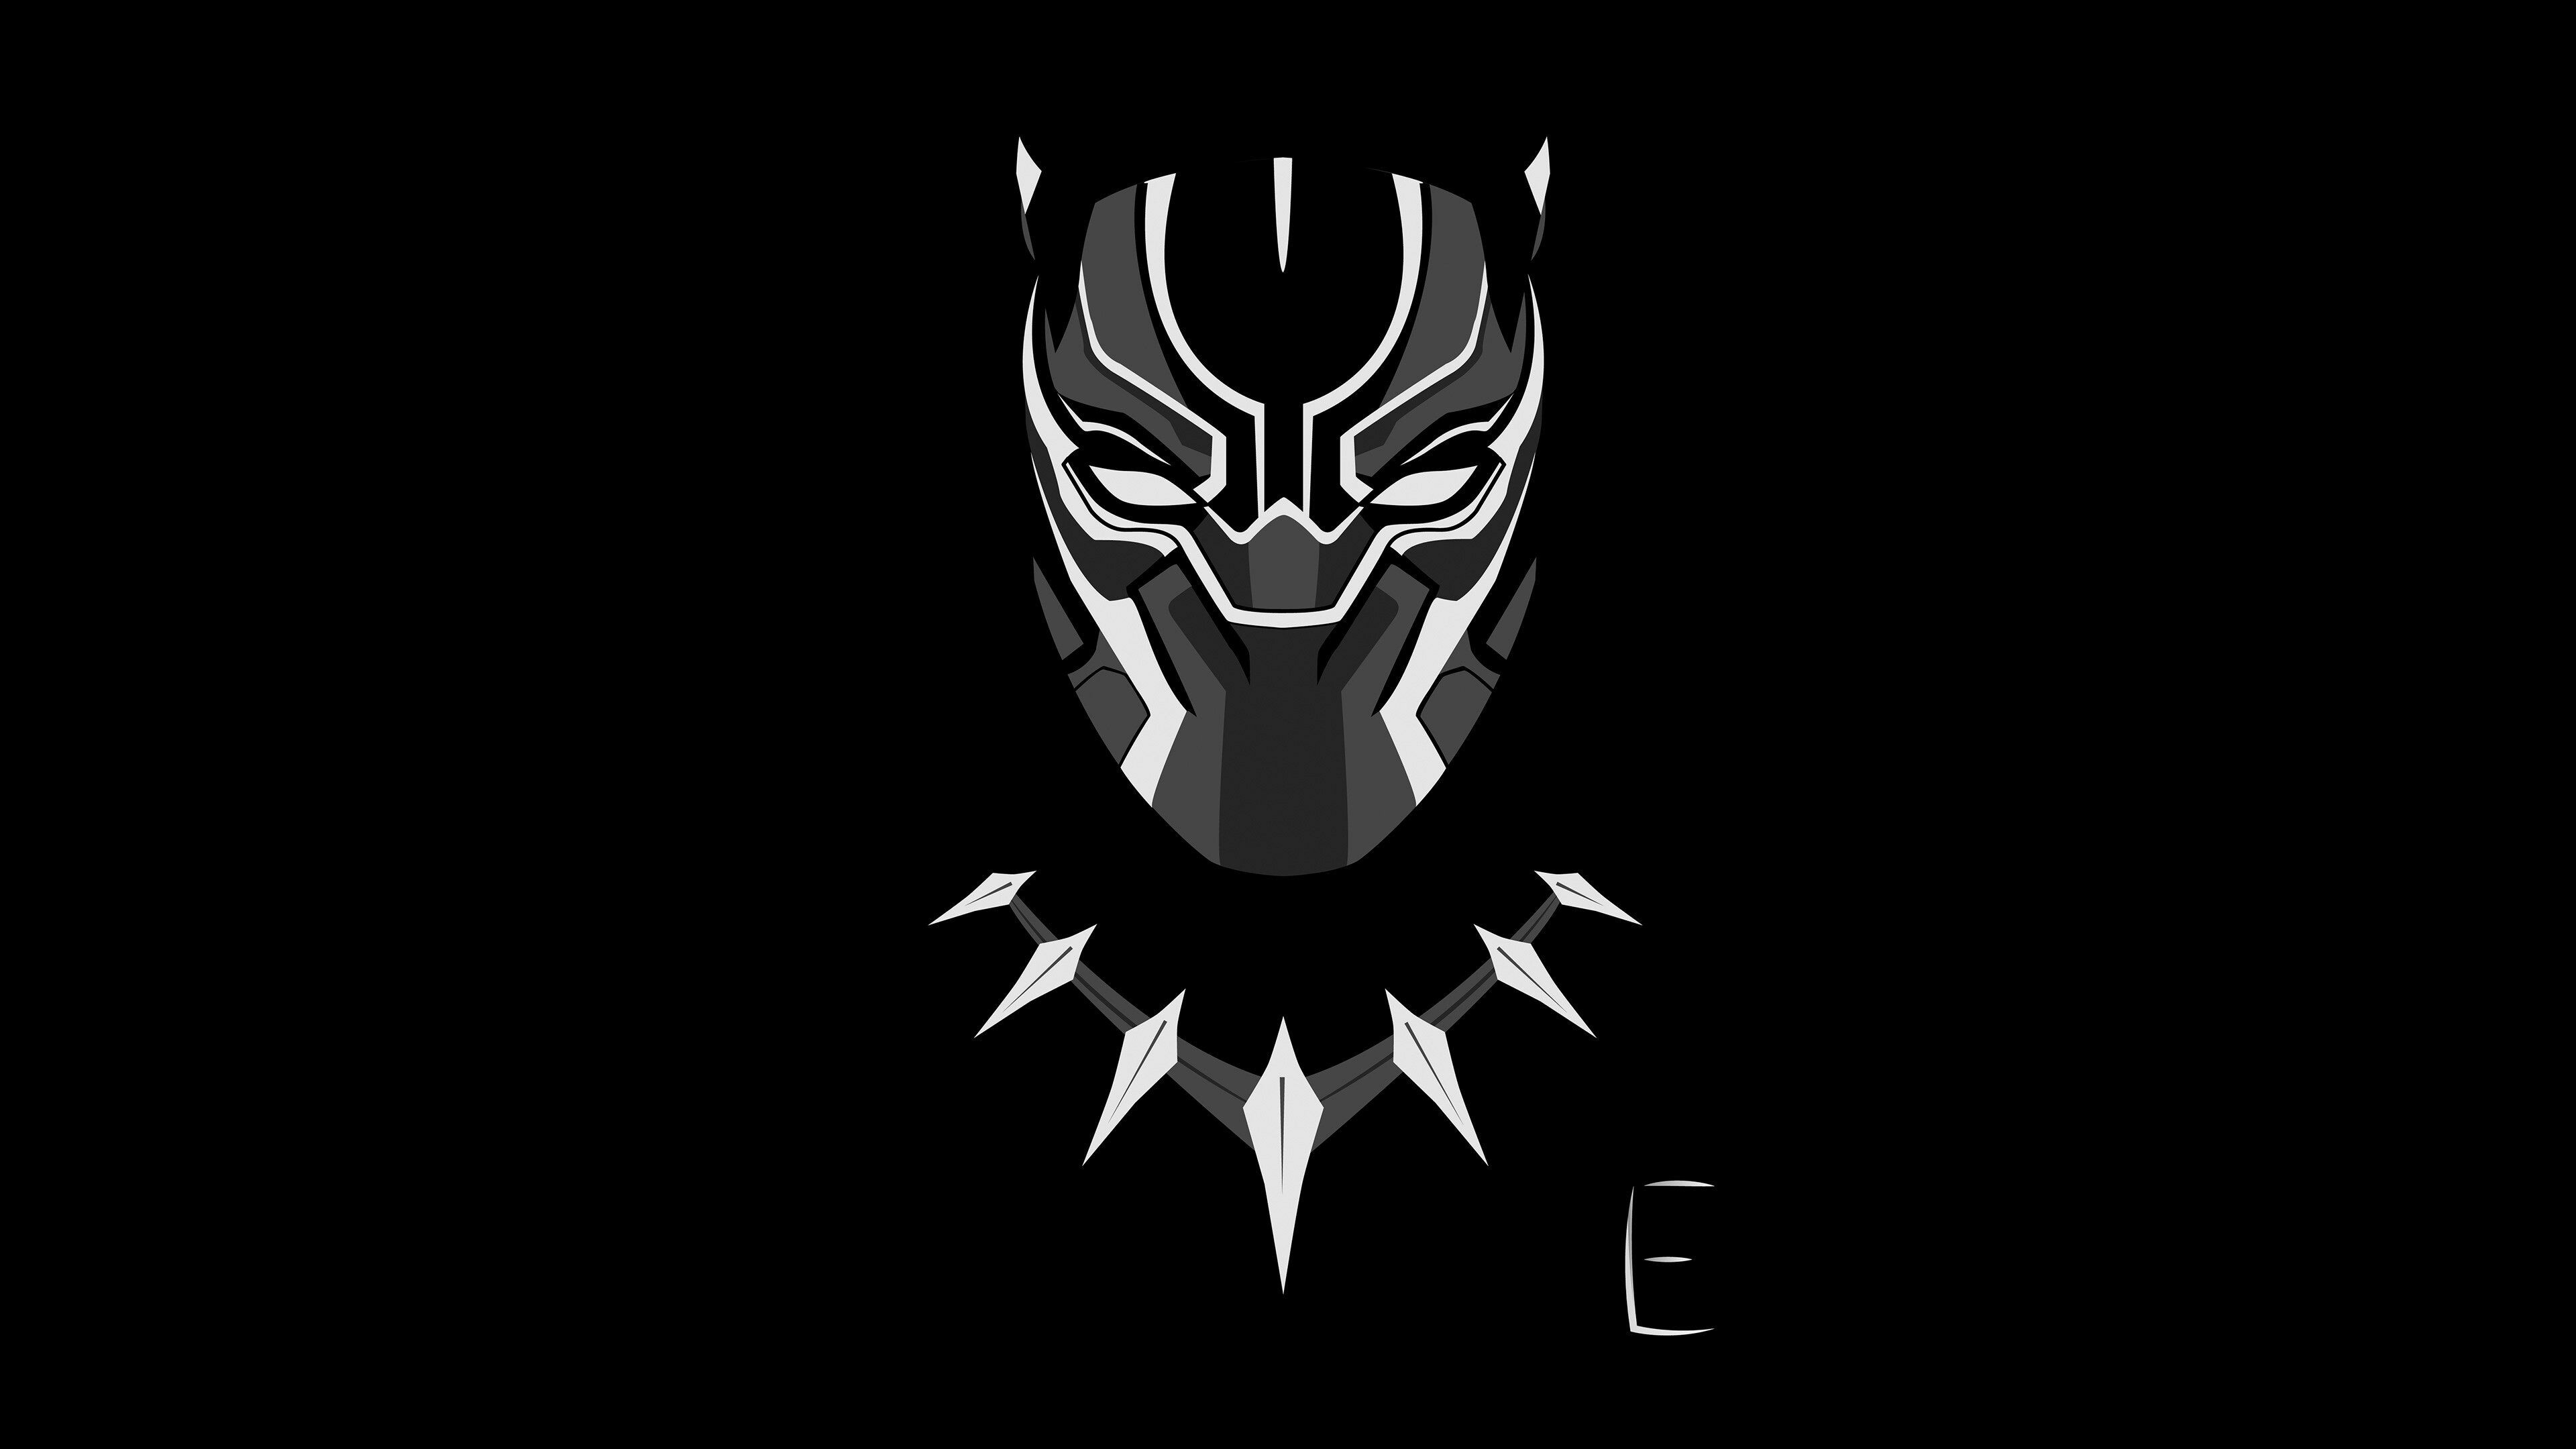 Black Panther: Wakanda Forever: MCU, Superhero, Minimalist, Art. 3840x2160 4K Background.